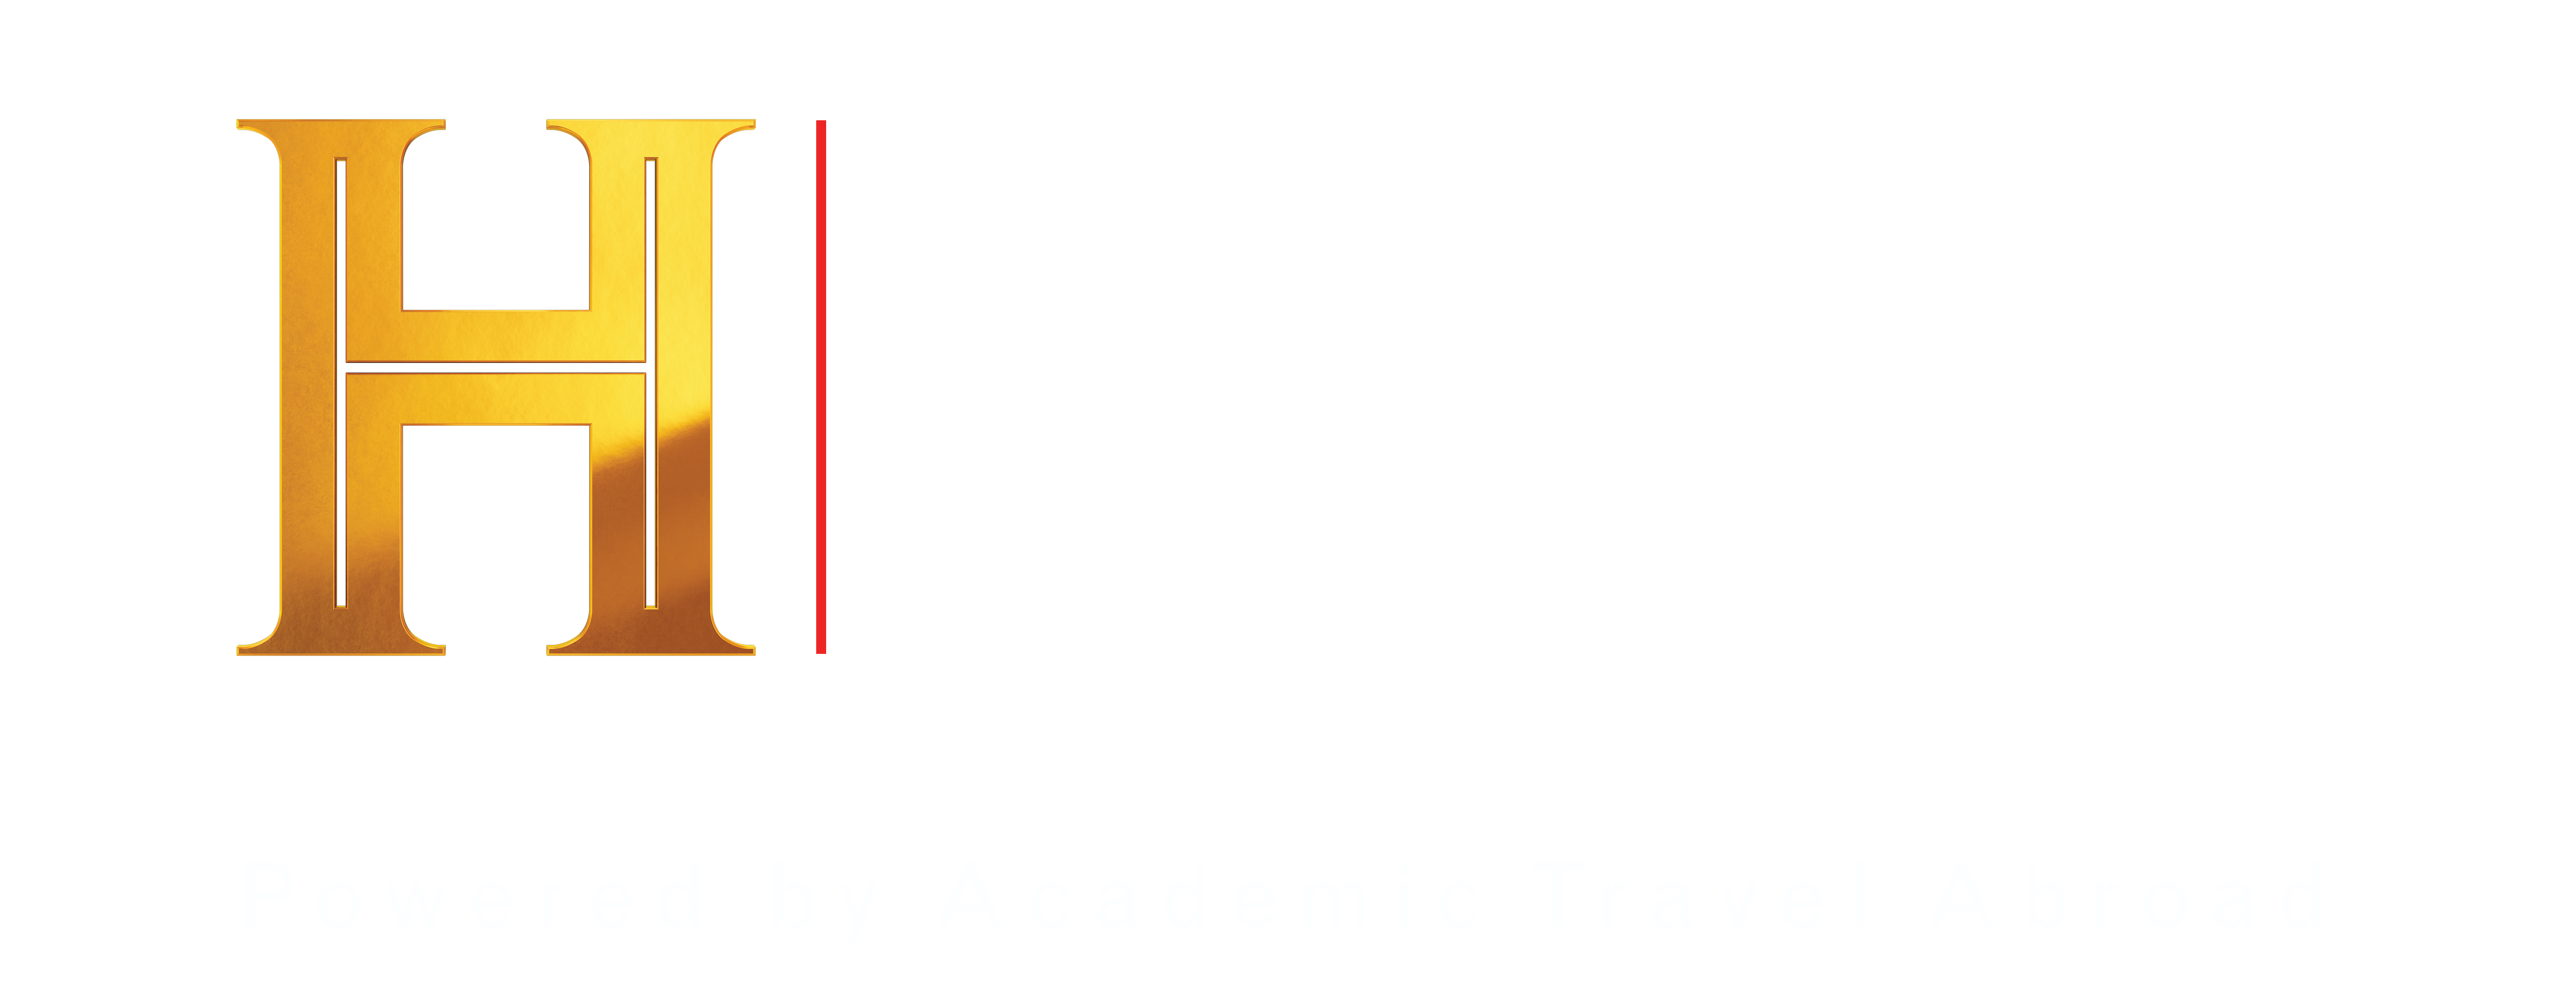 history of travel brochure